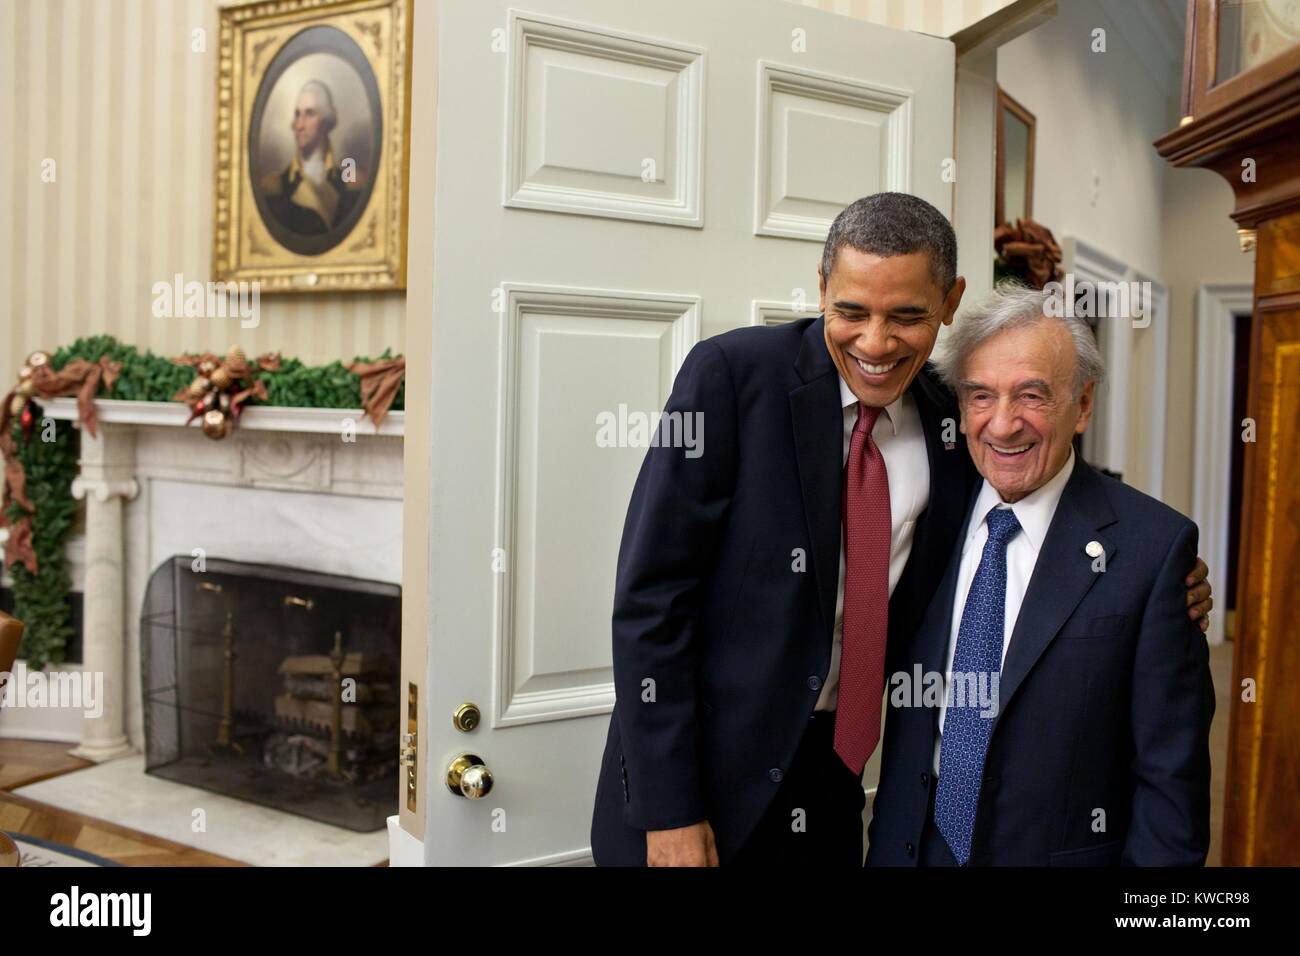 Präsident Barack Obama begrüßt Elie Wiesel im Oval Office, 5. Dezember 2011. (BSLOC 2015 3 132) Stockfoto